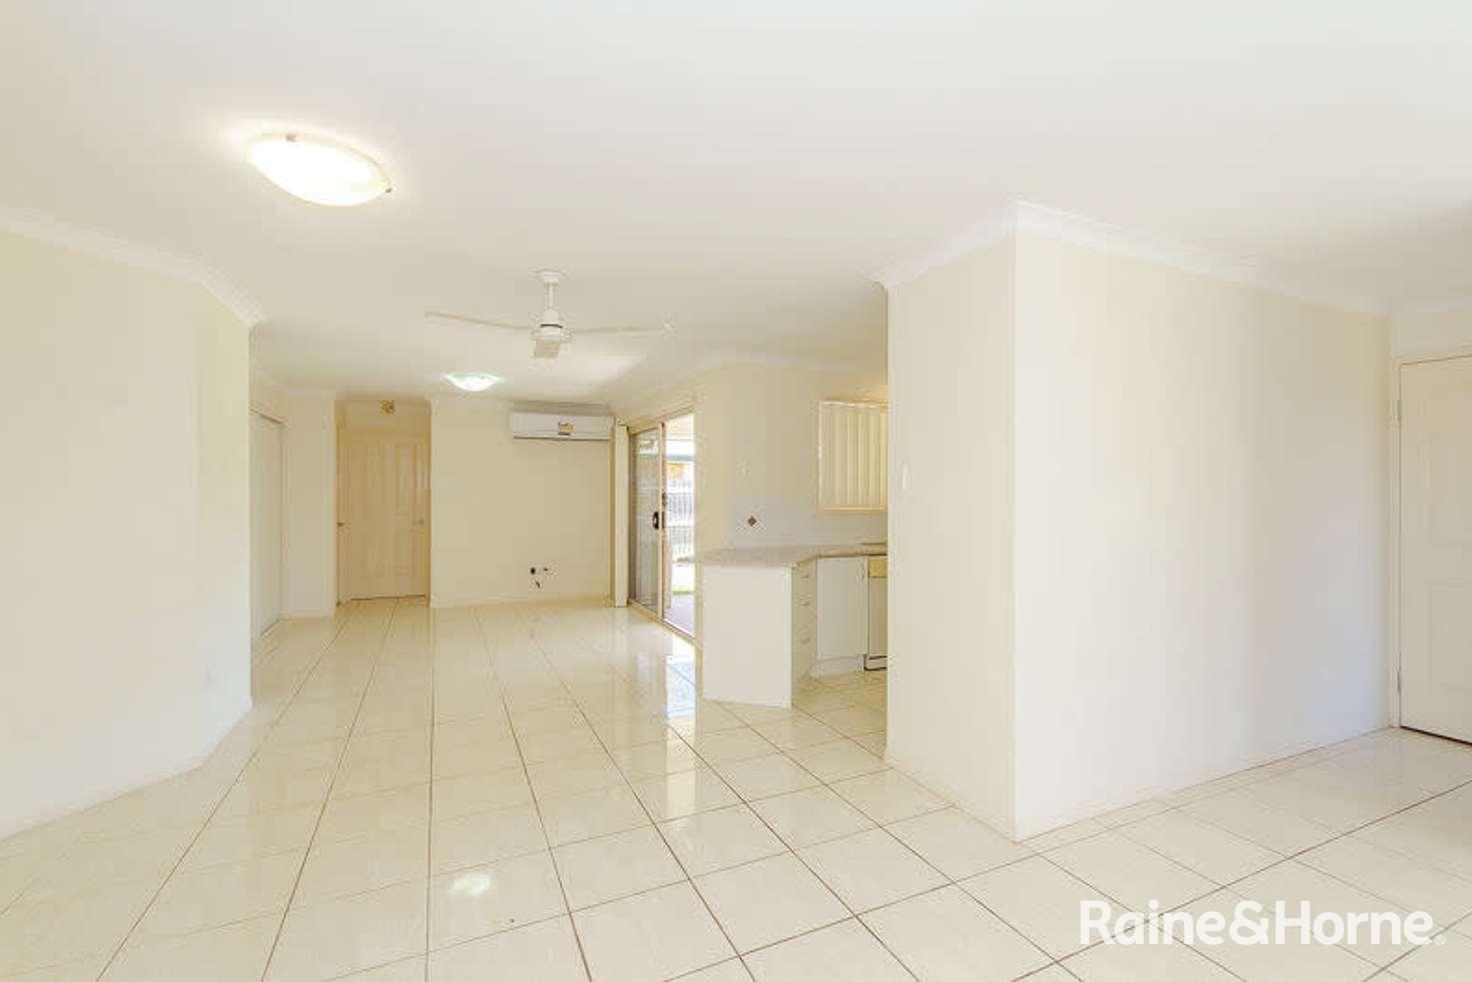 1/20 Reinaerhoff Crescent, Glen Eden, QLD 4680, 3部屋, 3バスルーム, Apartment